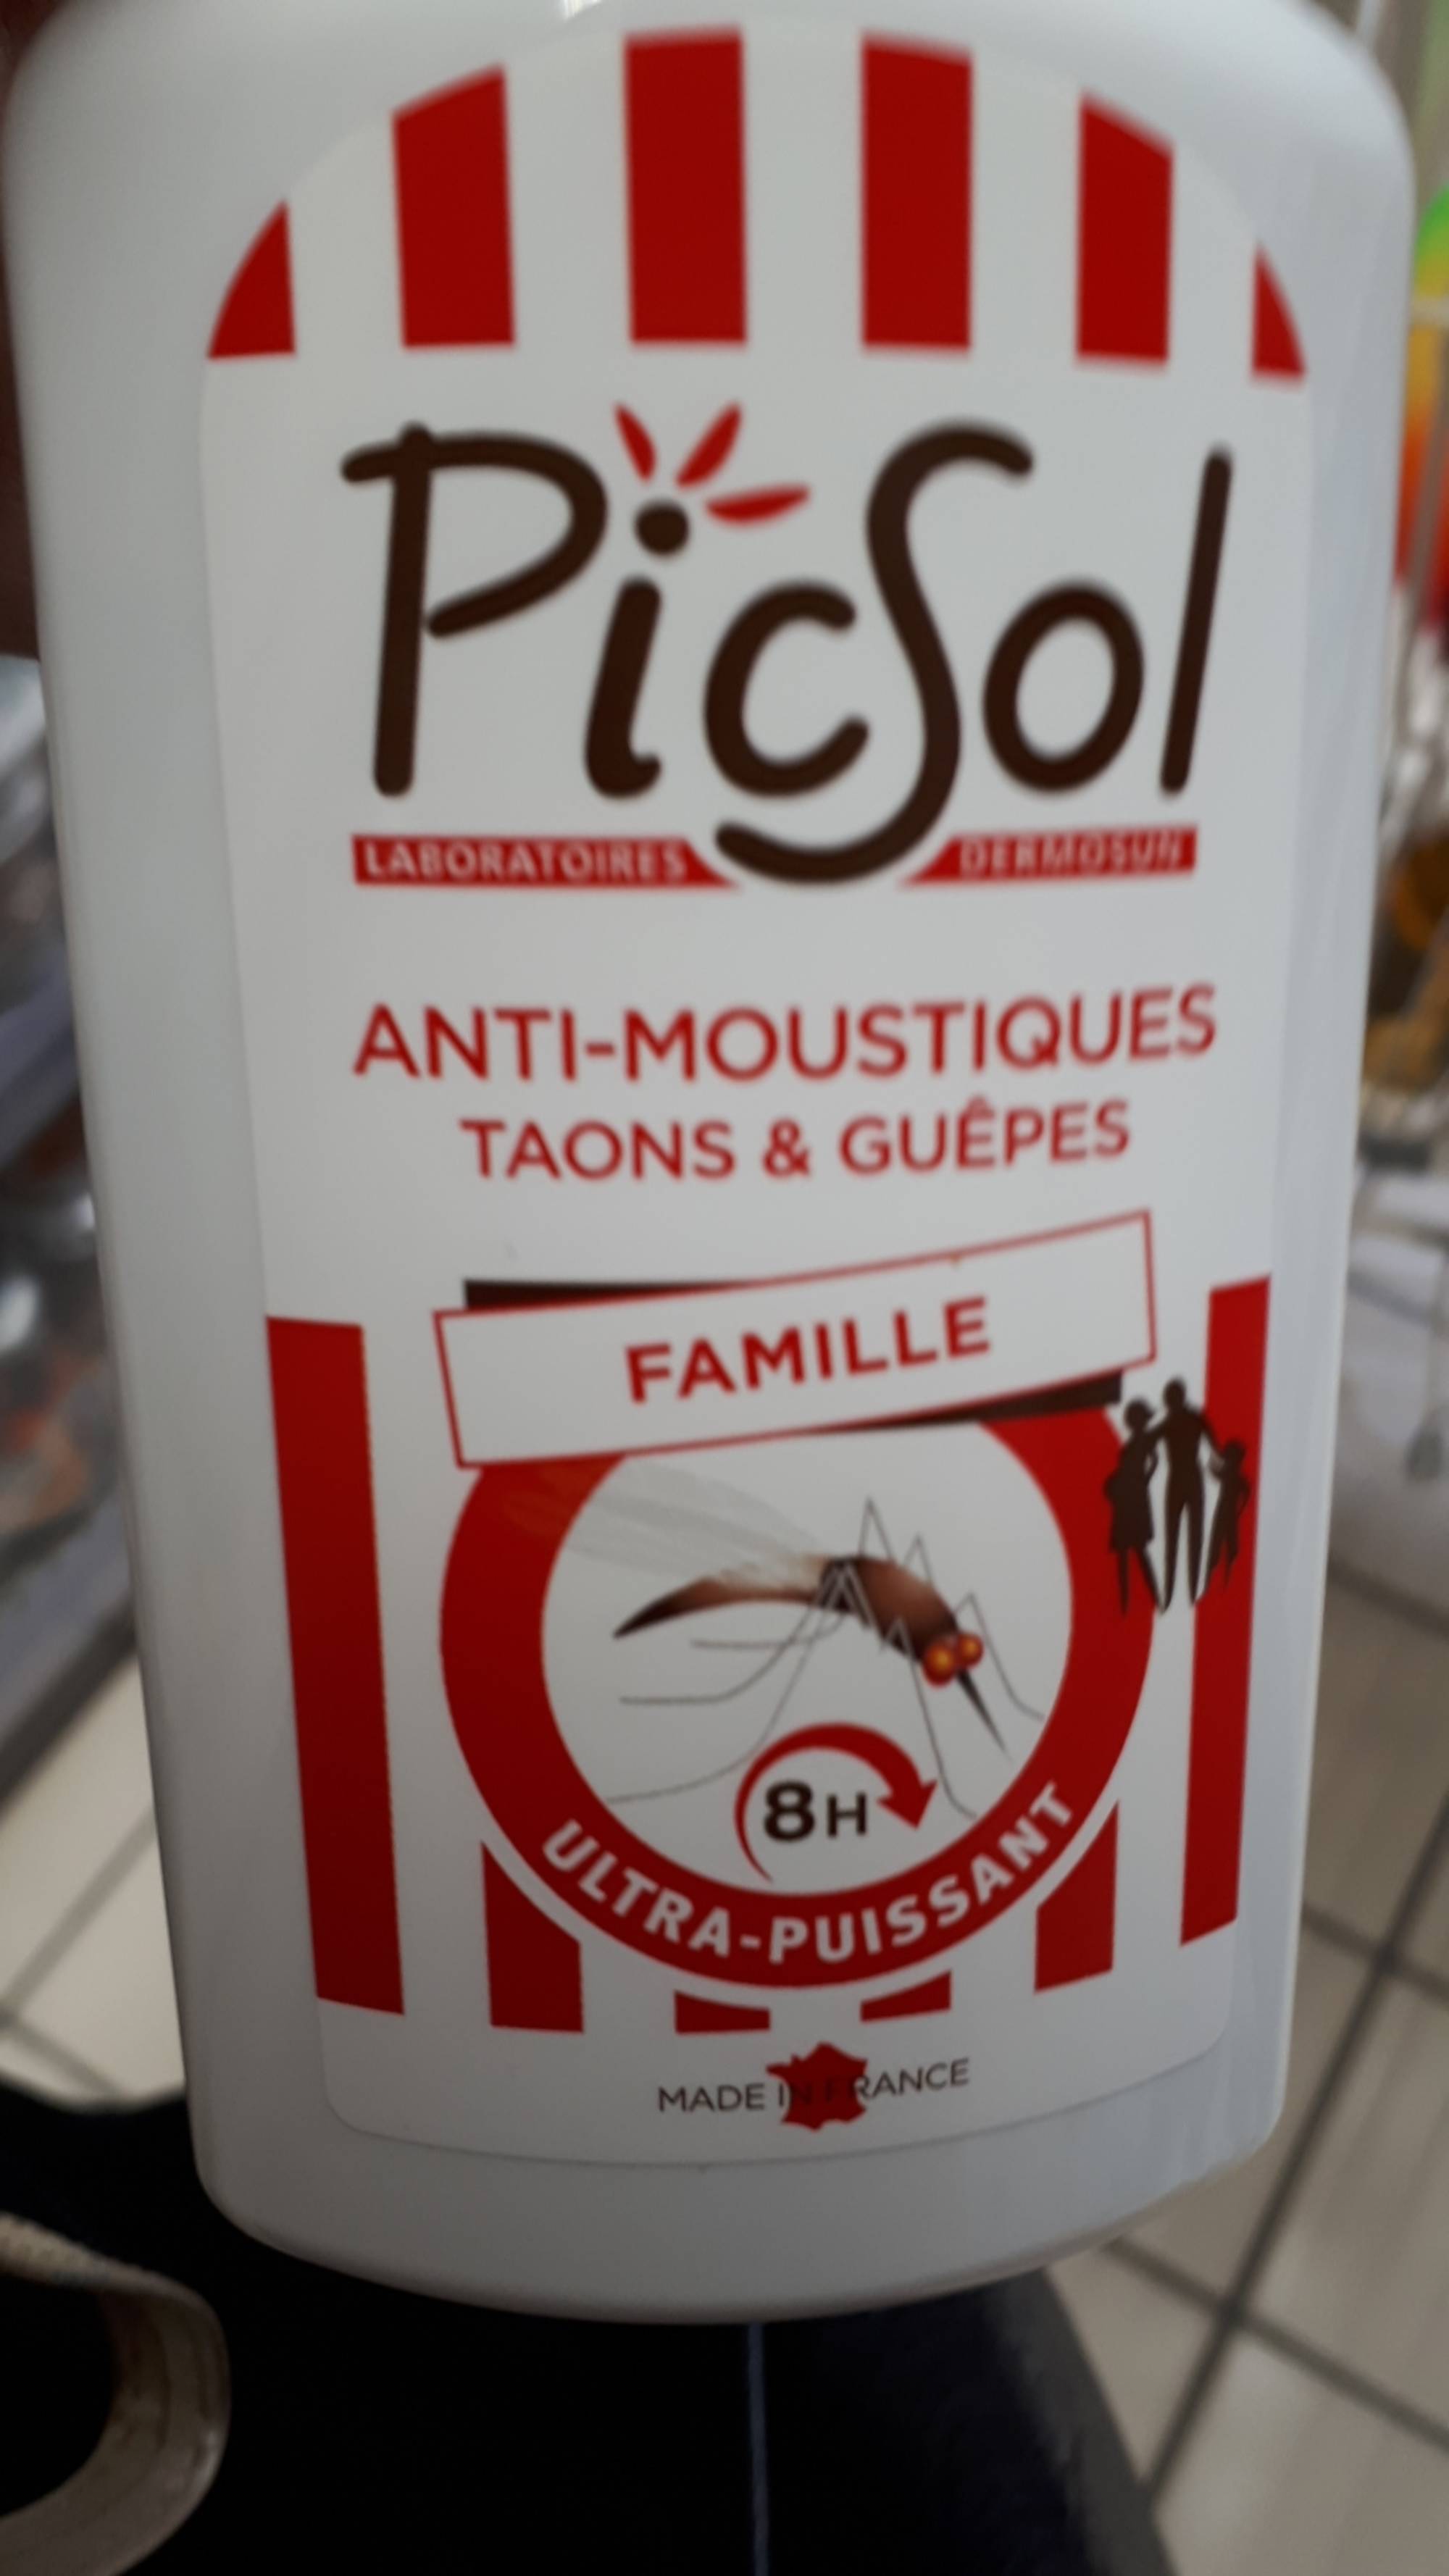 PICSOL - Anti-moustiques taons & guêpes ultra-puissant 8h